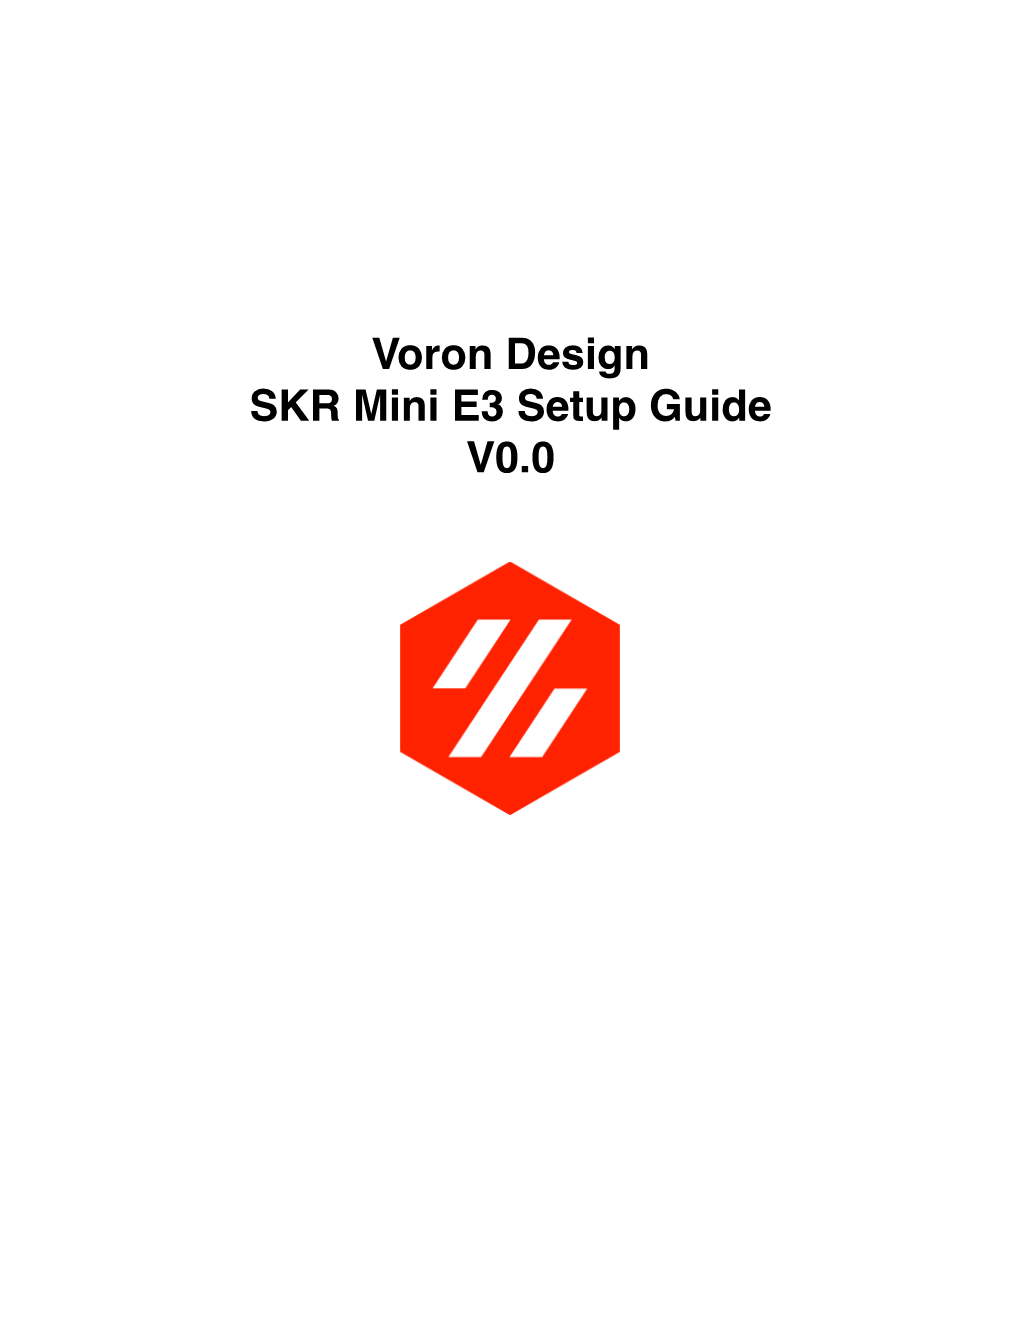 Voron Design SKR Mini E3 Setup Guide V0.0 Power Supply Wiring